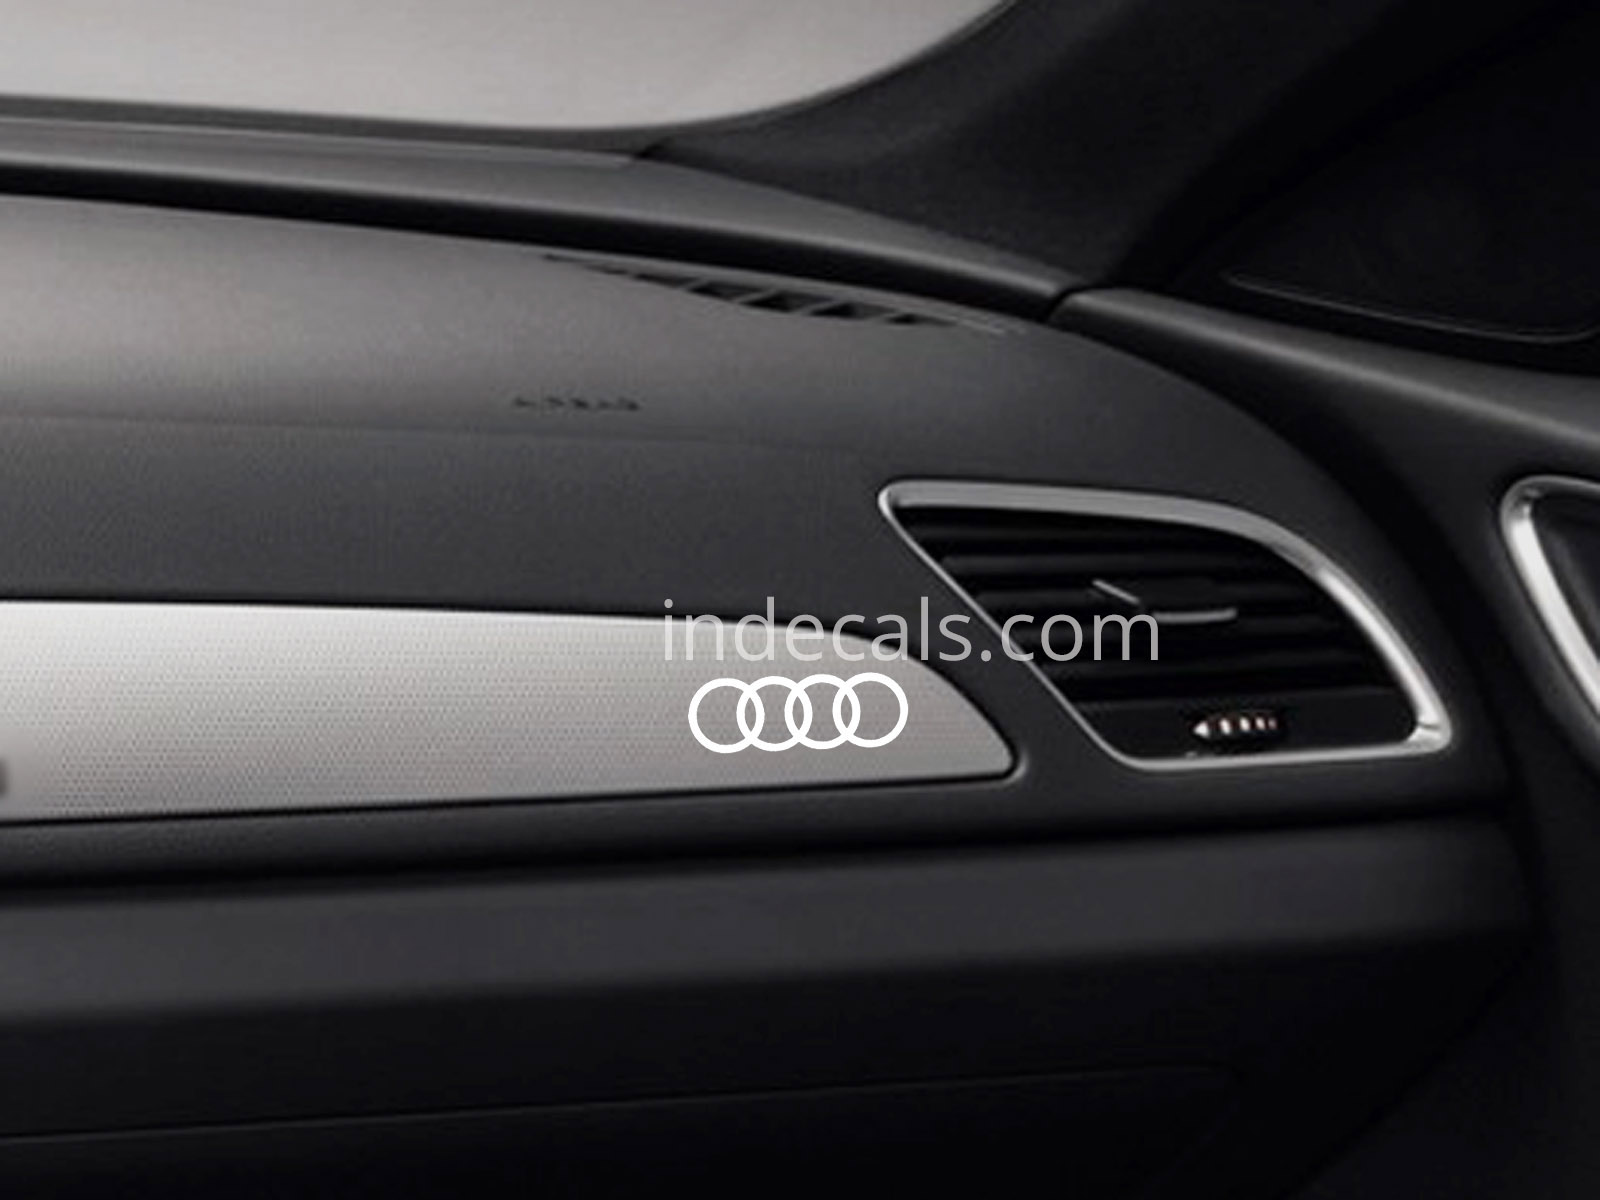 3 x Audi Rings Stickers for Dash Trim - White